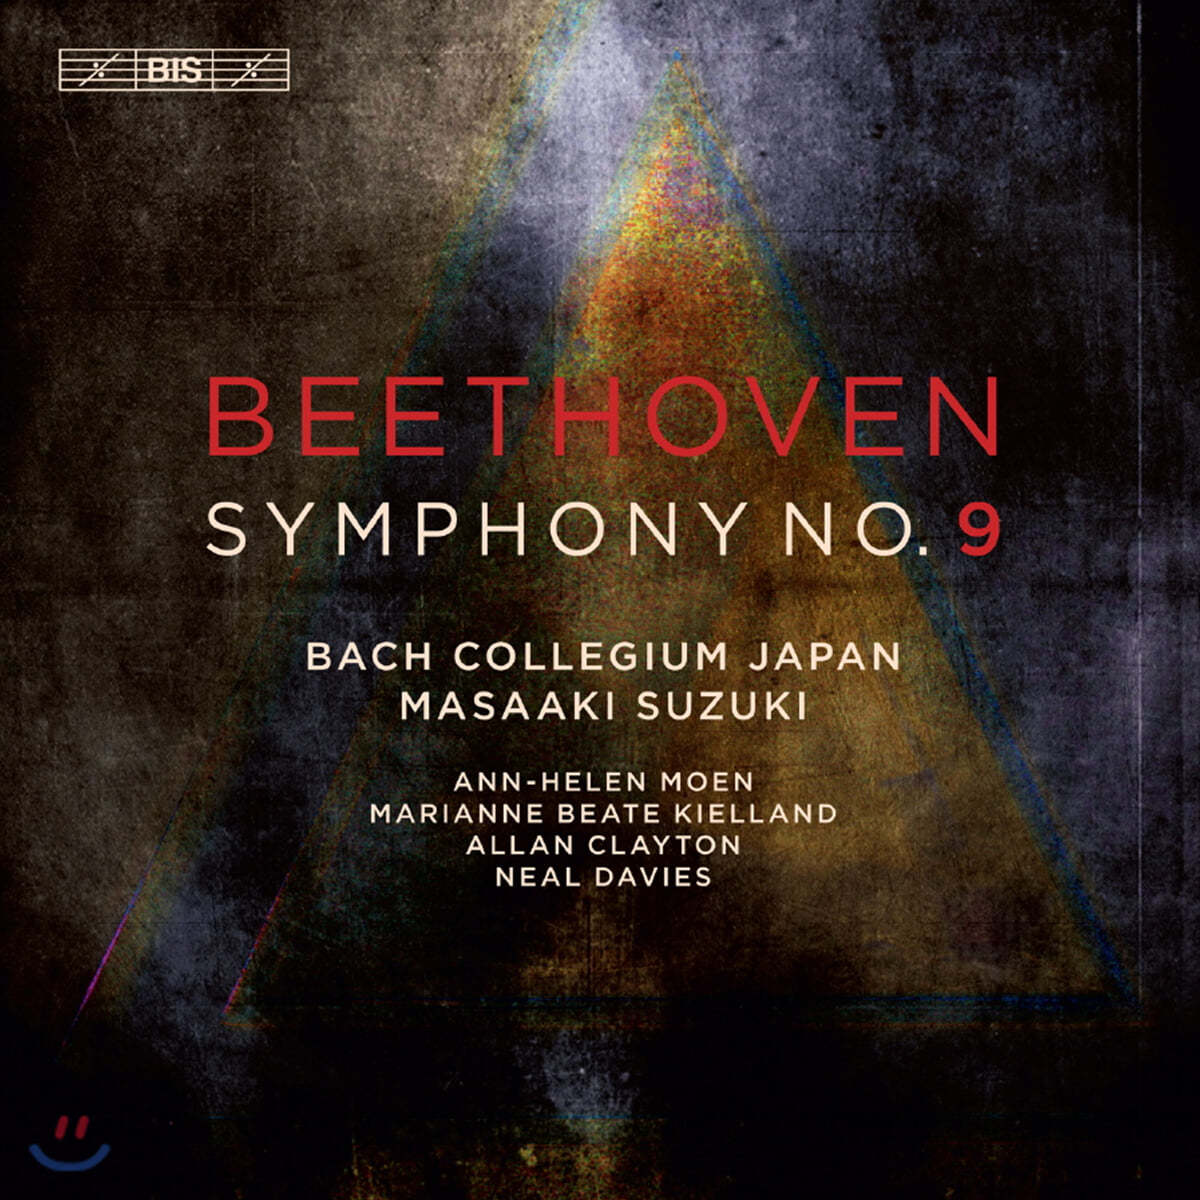 Masaaki Suzuki 베토벤: 교향곡 9번 (Beethoven: Symphony Op. 125)